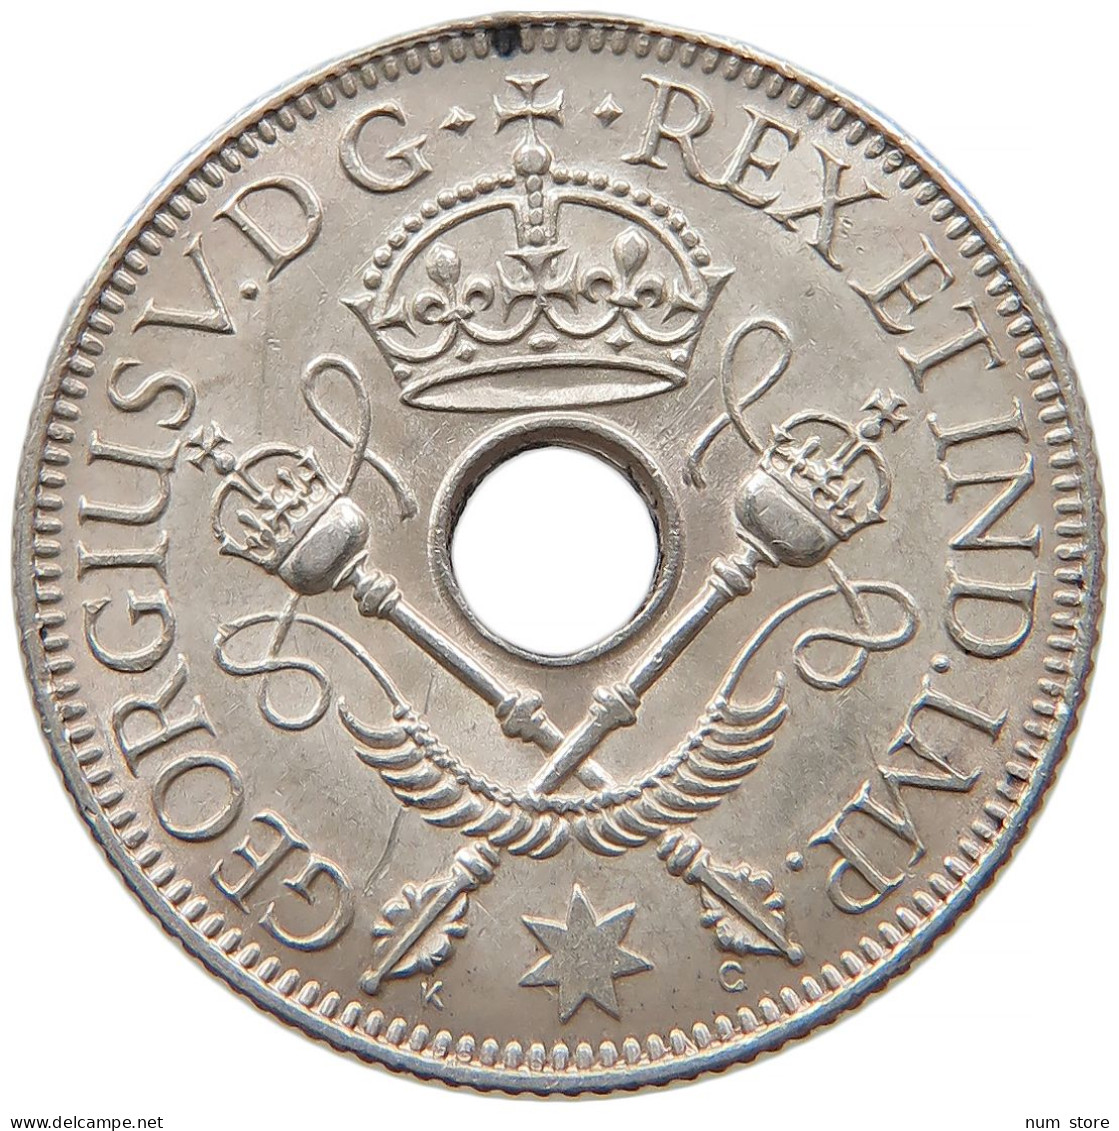 NEW GUINEA SHILLING 1935 George V. (1910-1936) #t011 0179 - Papouasie-Nouvelle-Guinée